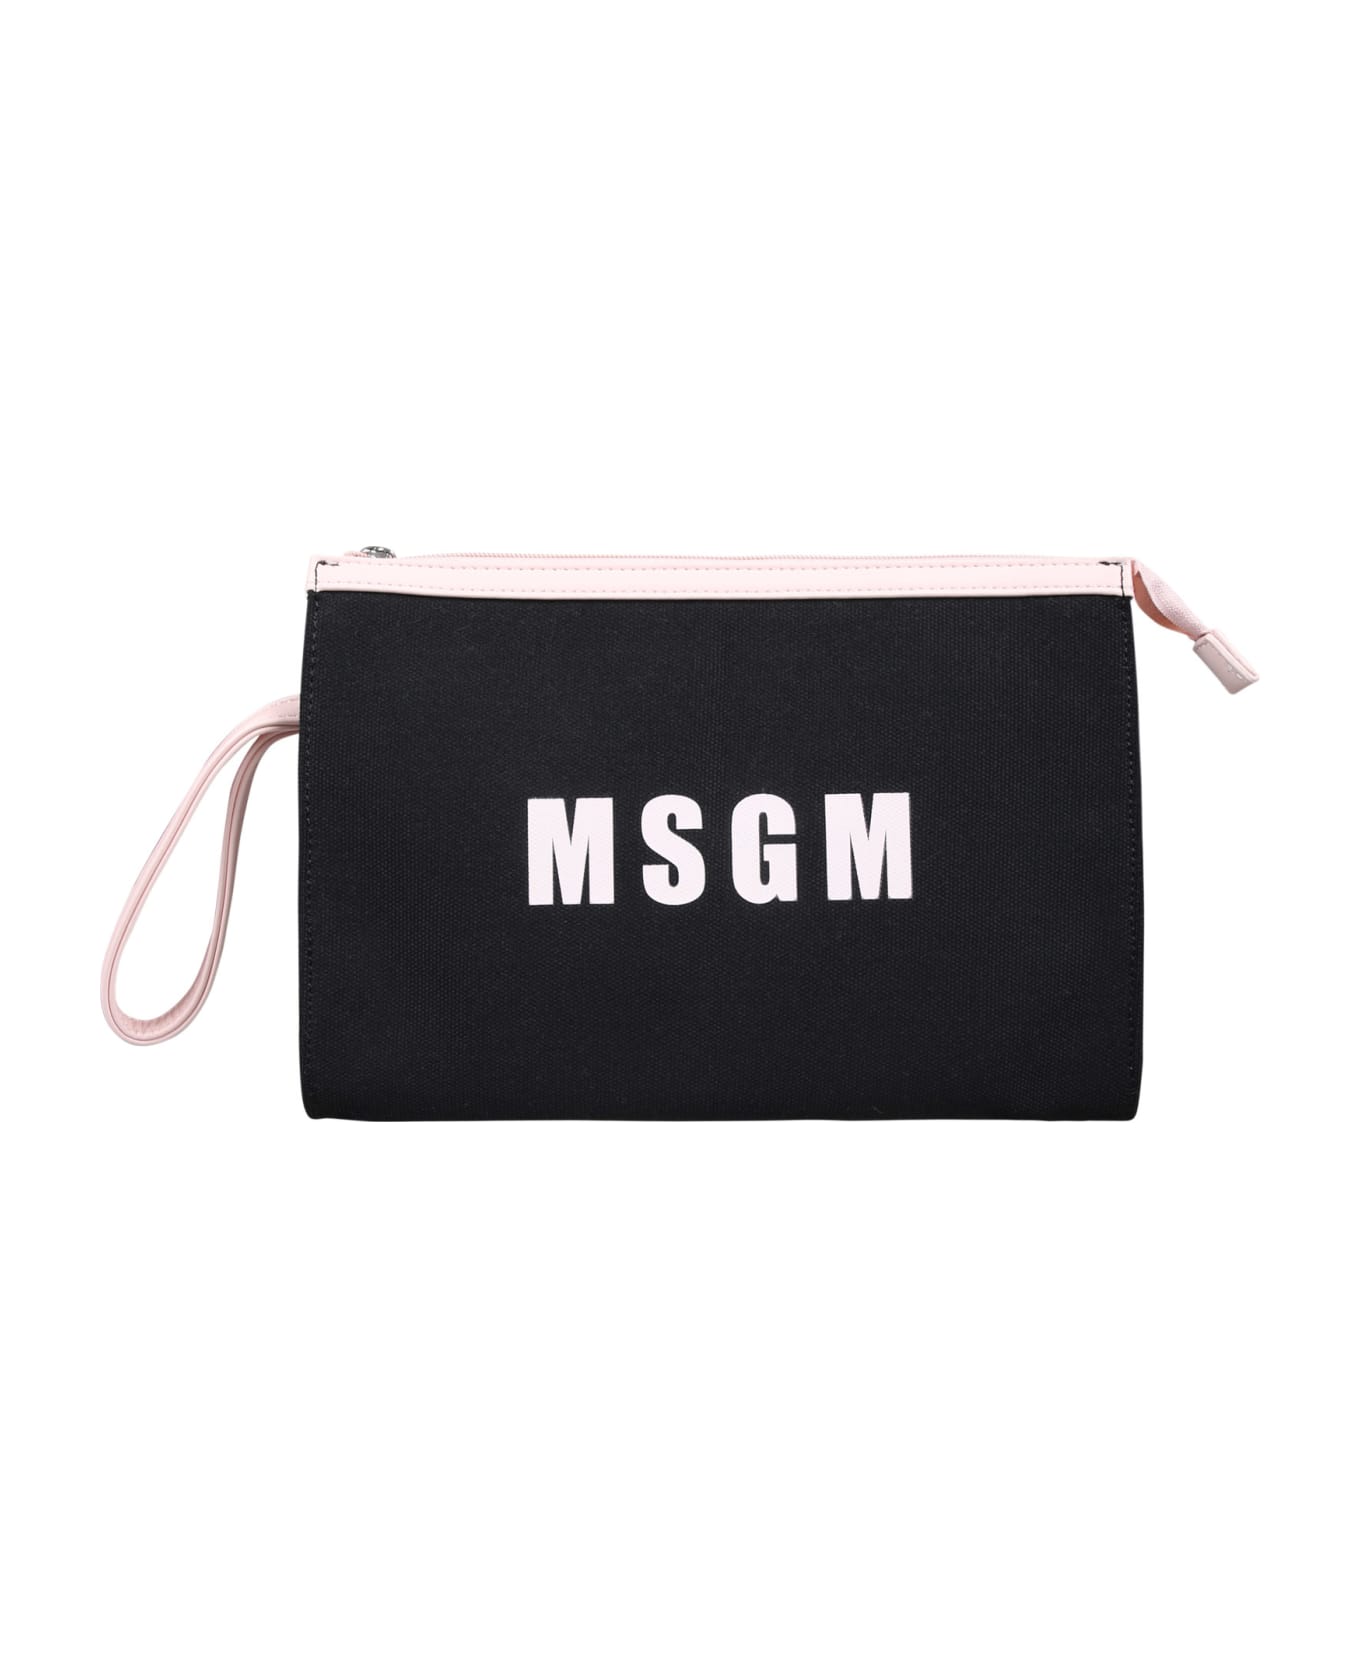 MSGM Black Cluch Bag For Girl With Logo - Black